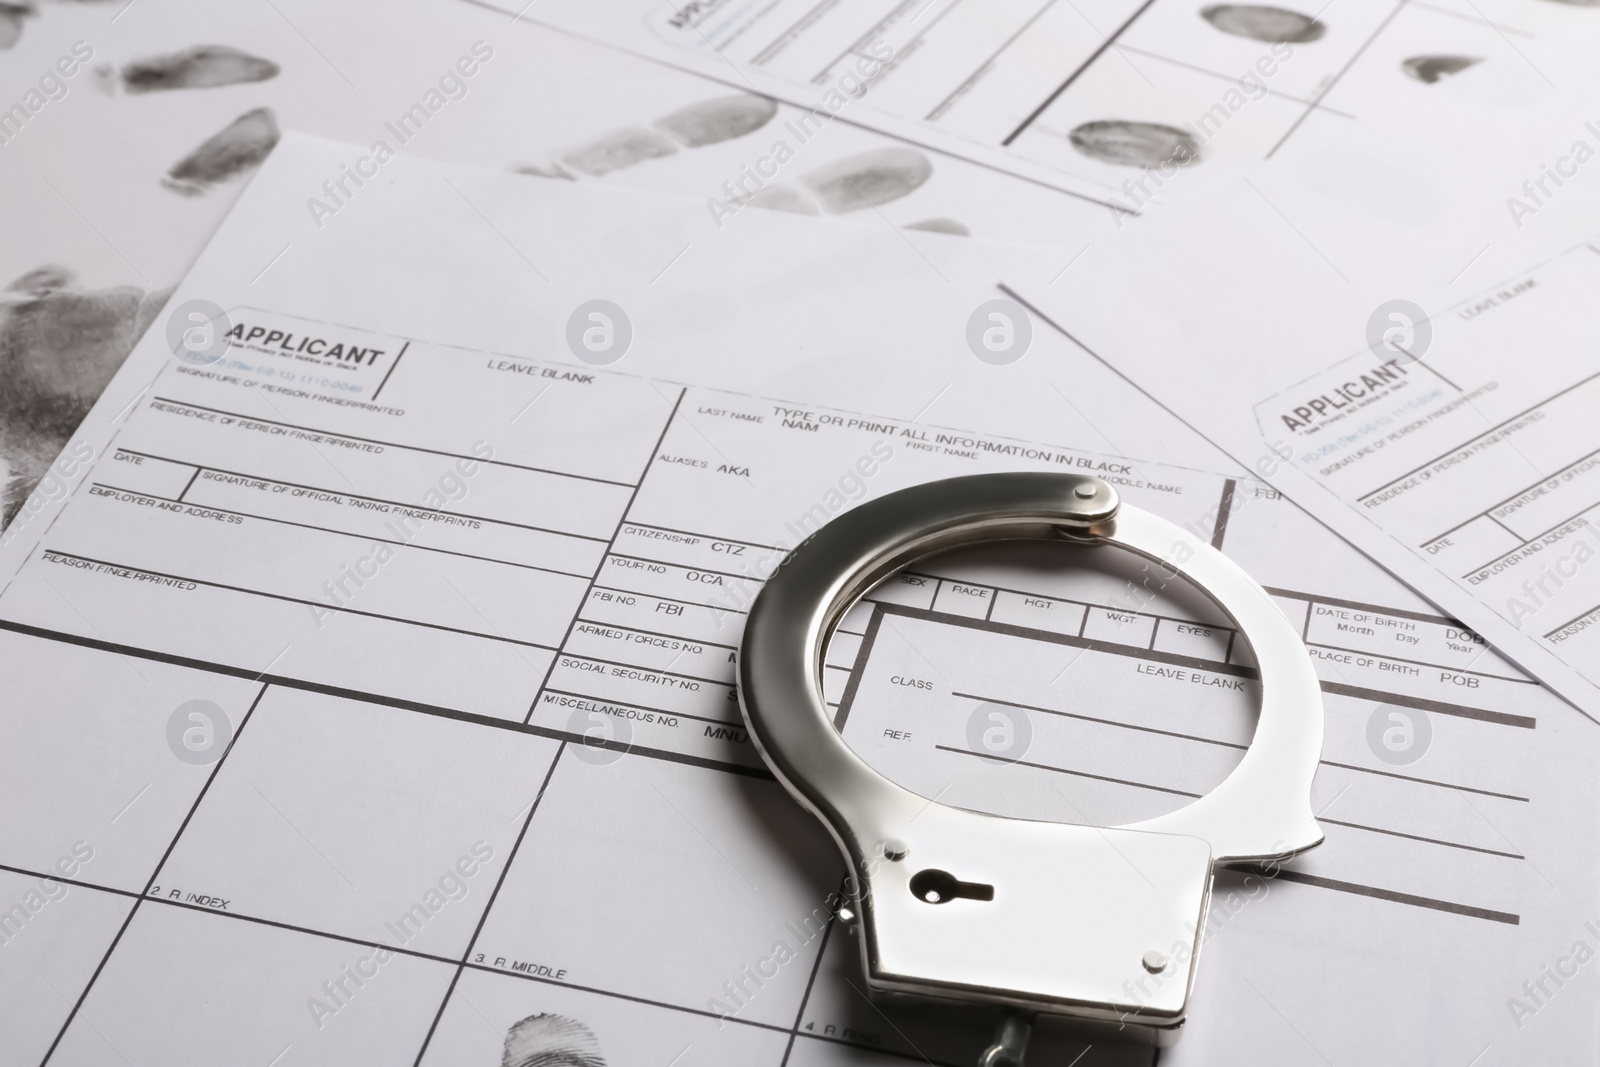 Photo of Handcuffs and fingerprint record sheets, closeup. Criminal investigation